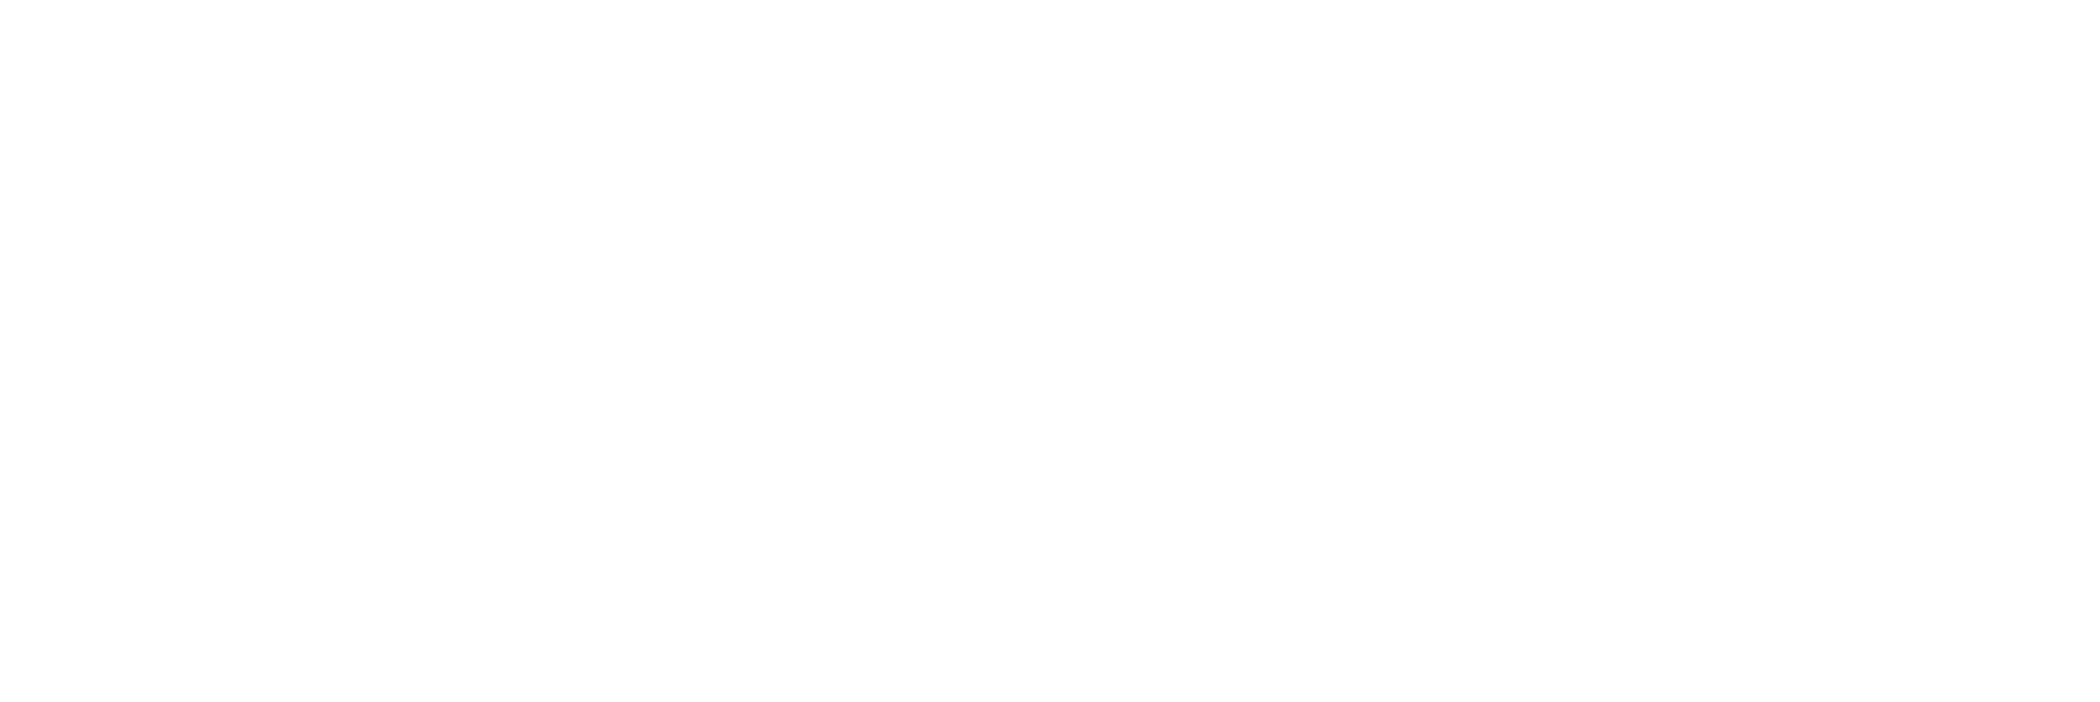 mo1638mb6f-mount-sinai-logo-mount-sinai-brand-center